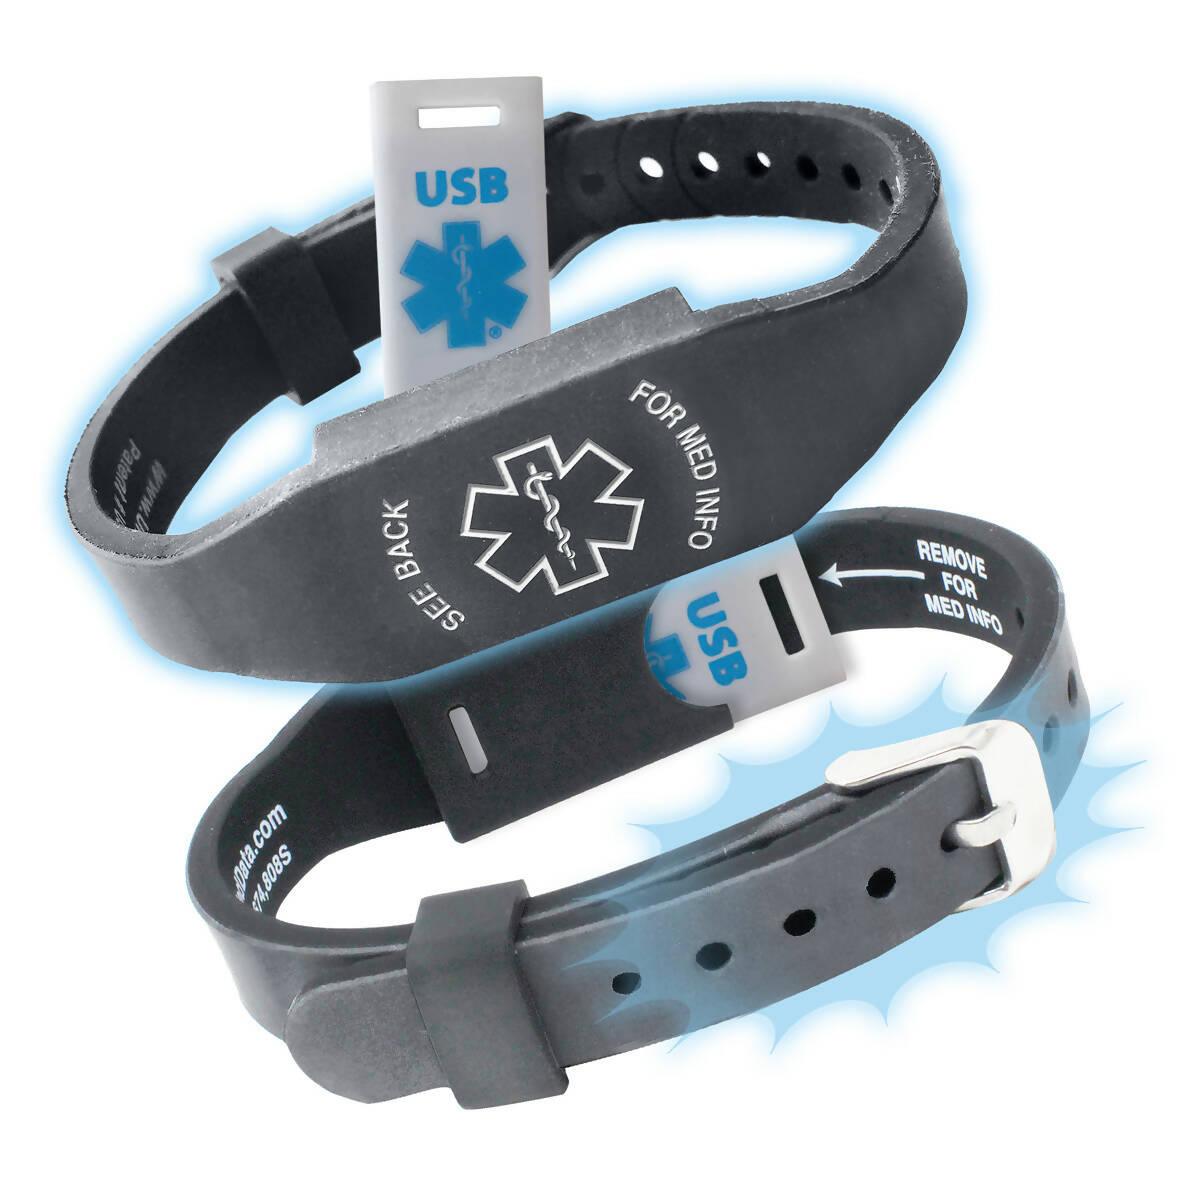 24/7 Wear Medical Alert Bracelets with Safety Clasp Option